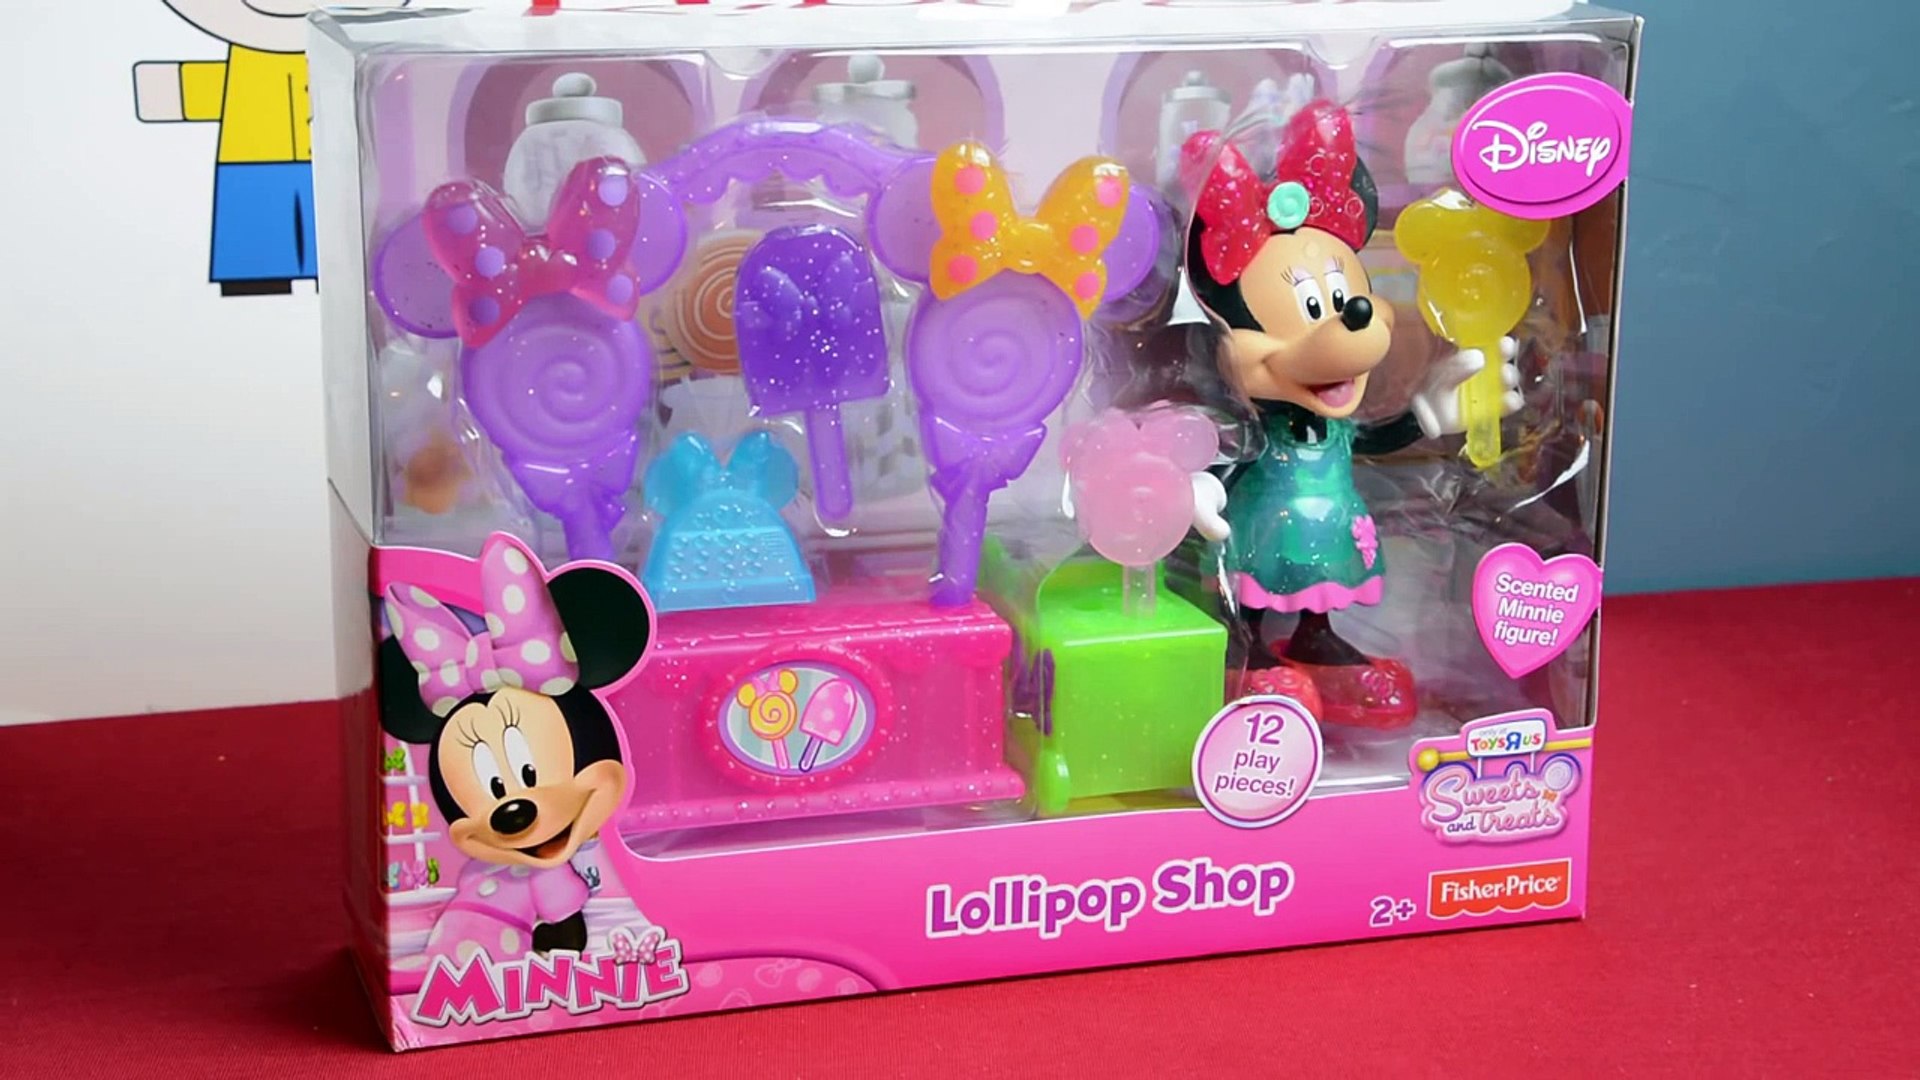 Disney Princess Magiclip - Disney Princess Songs - Disney Princess Toys